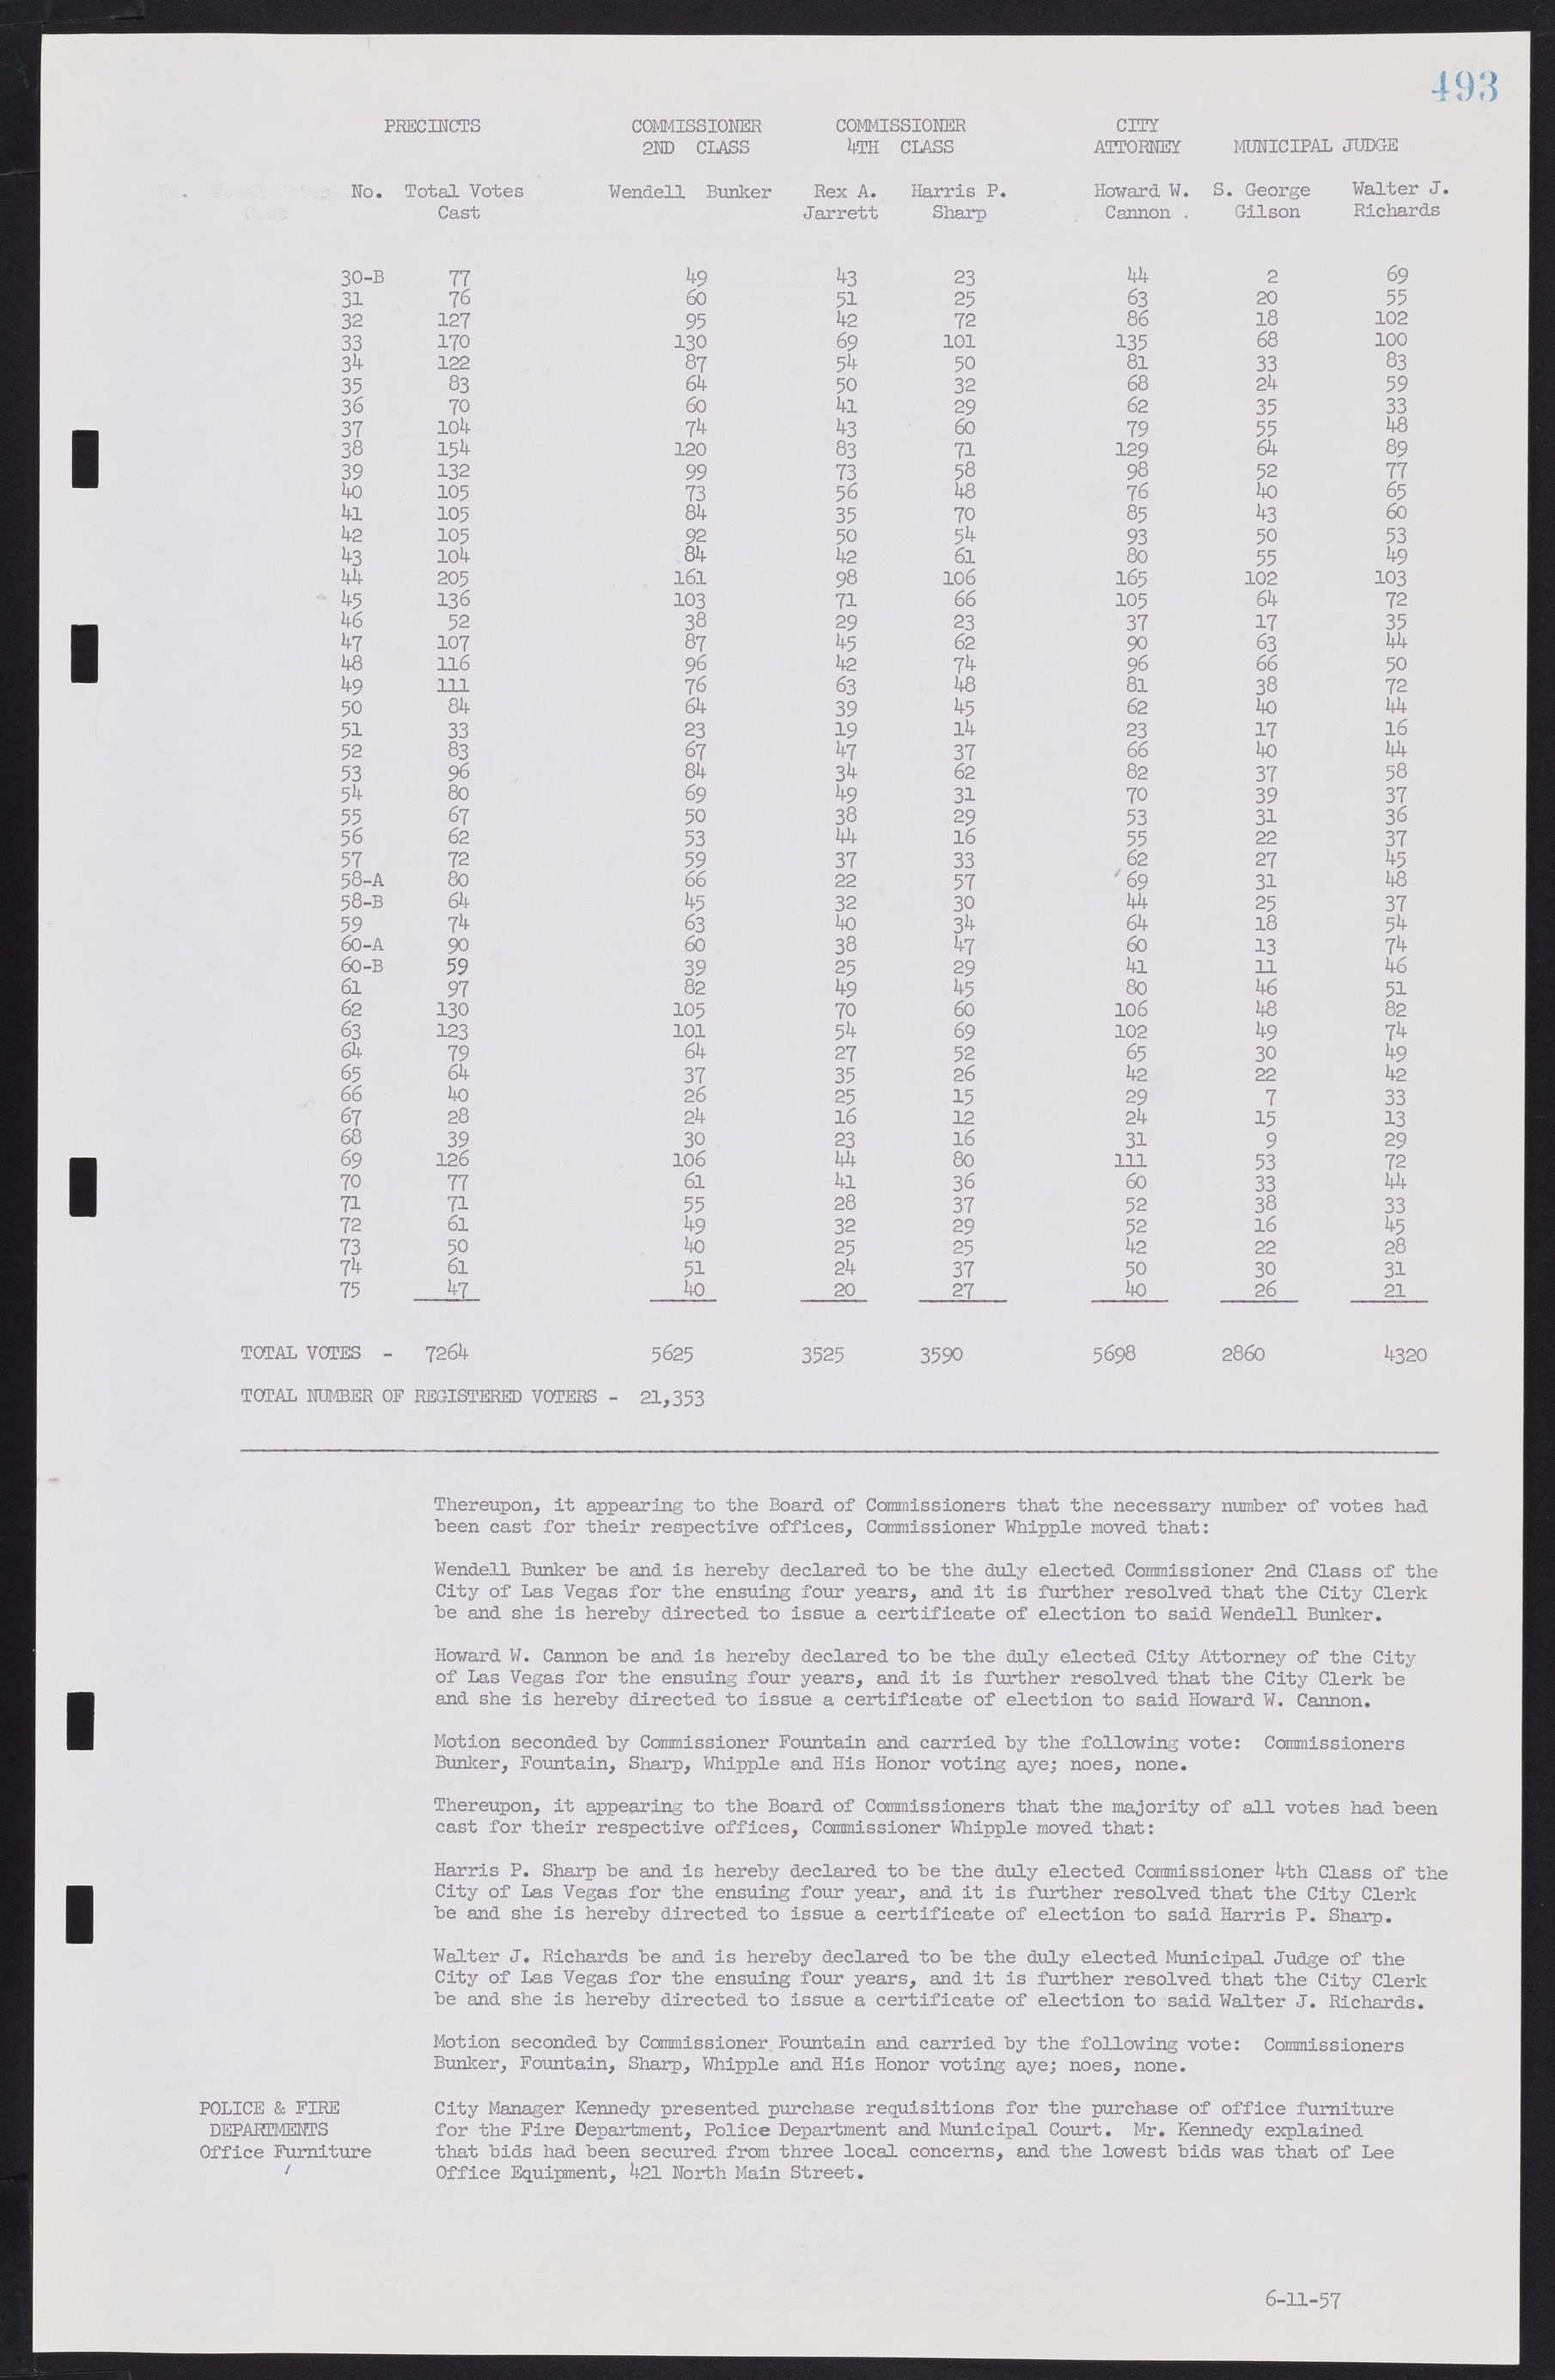 Las Vegas City Commission Minutes, September 21, 1955 to November 20, 1957, lvc000010-513